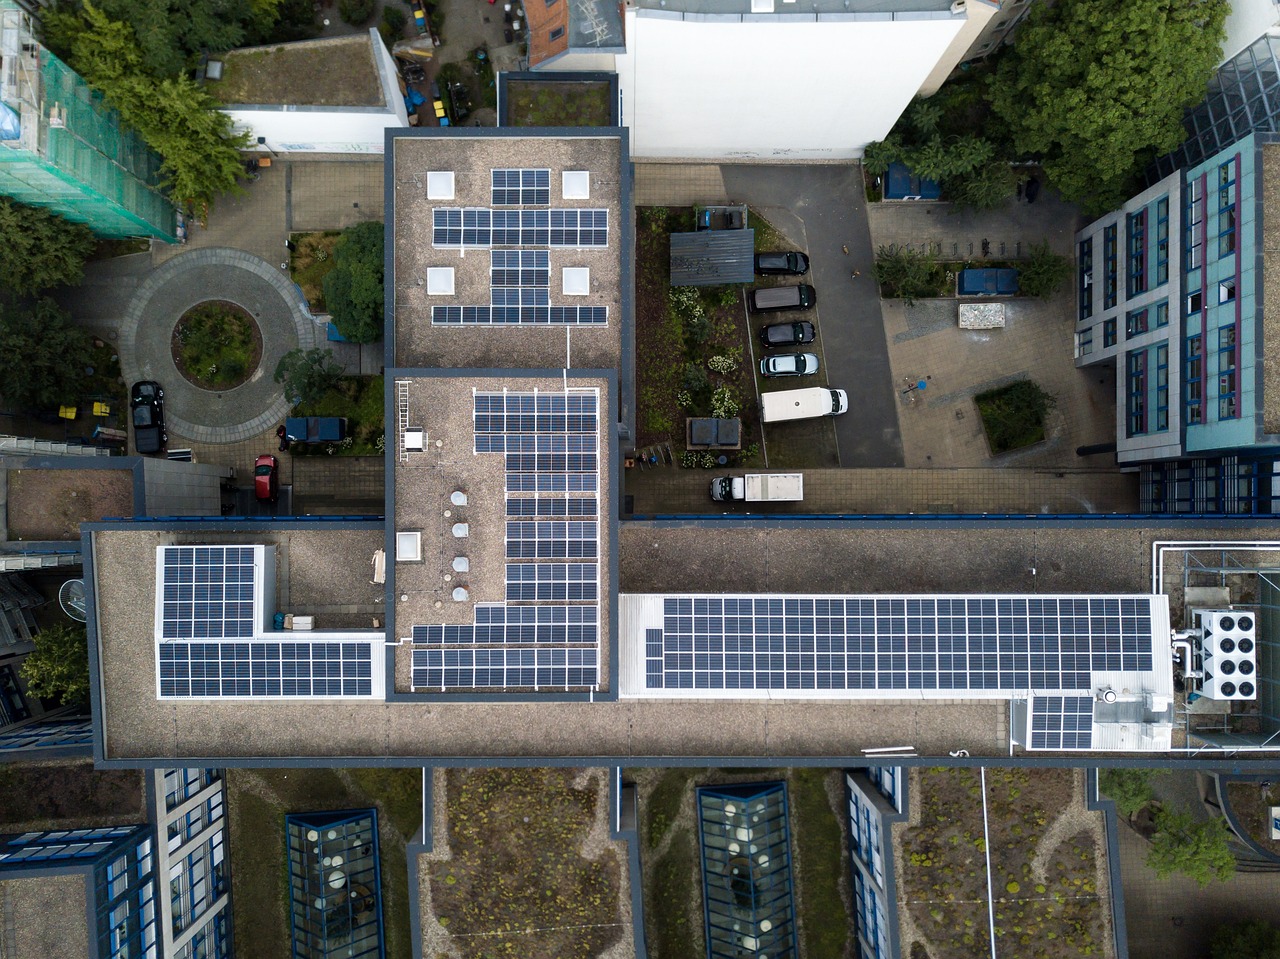 Solarni paneli na strehi stavbe.